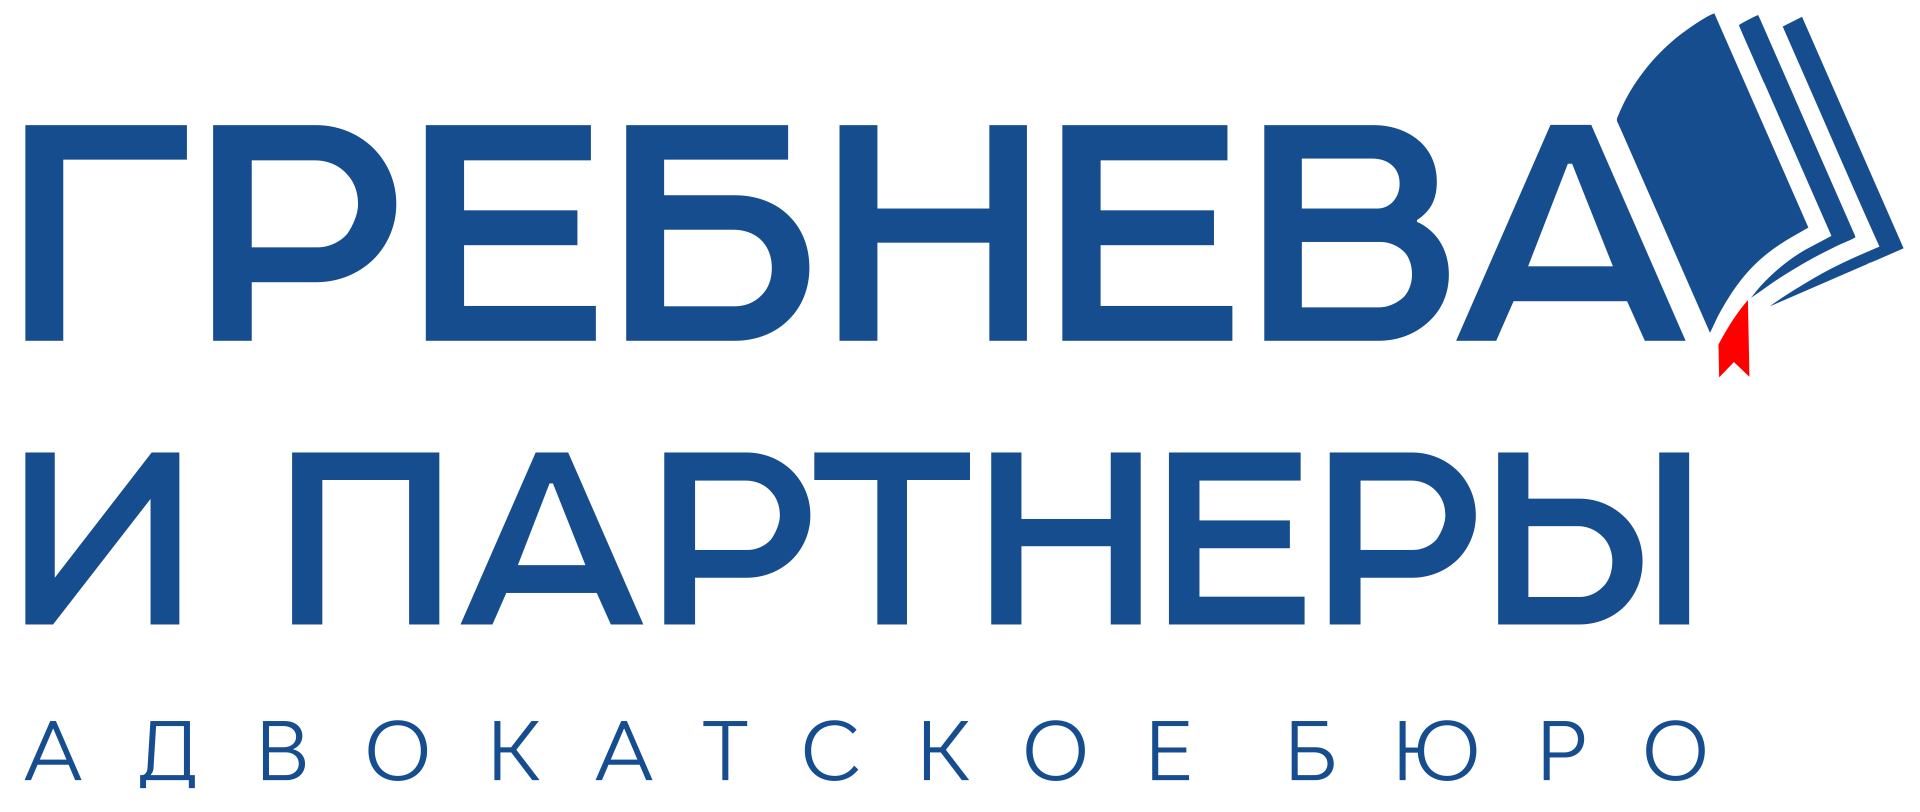 2022 grebneva and patrners logo